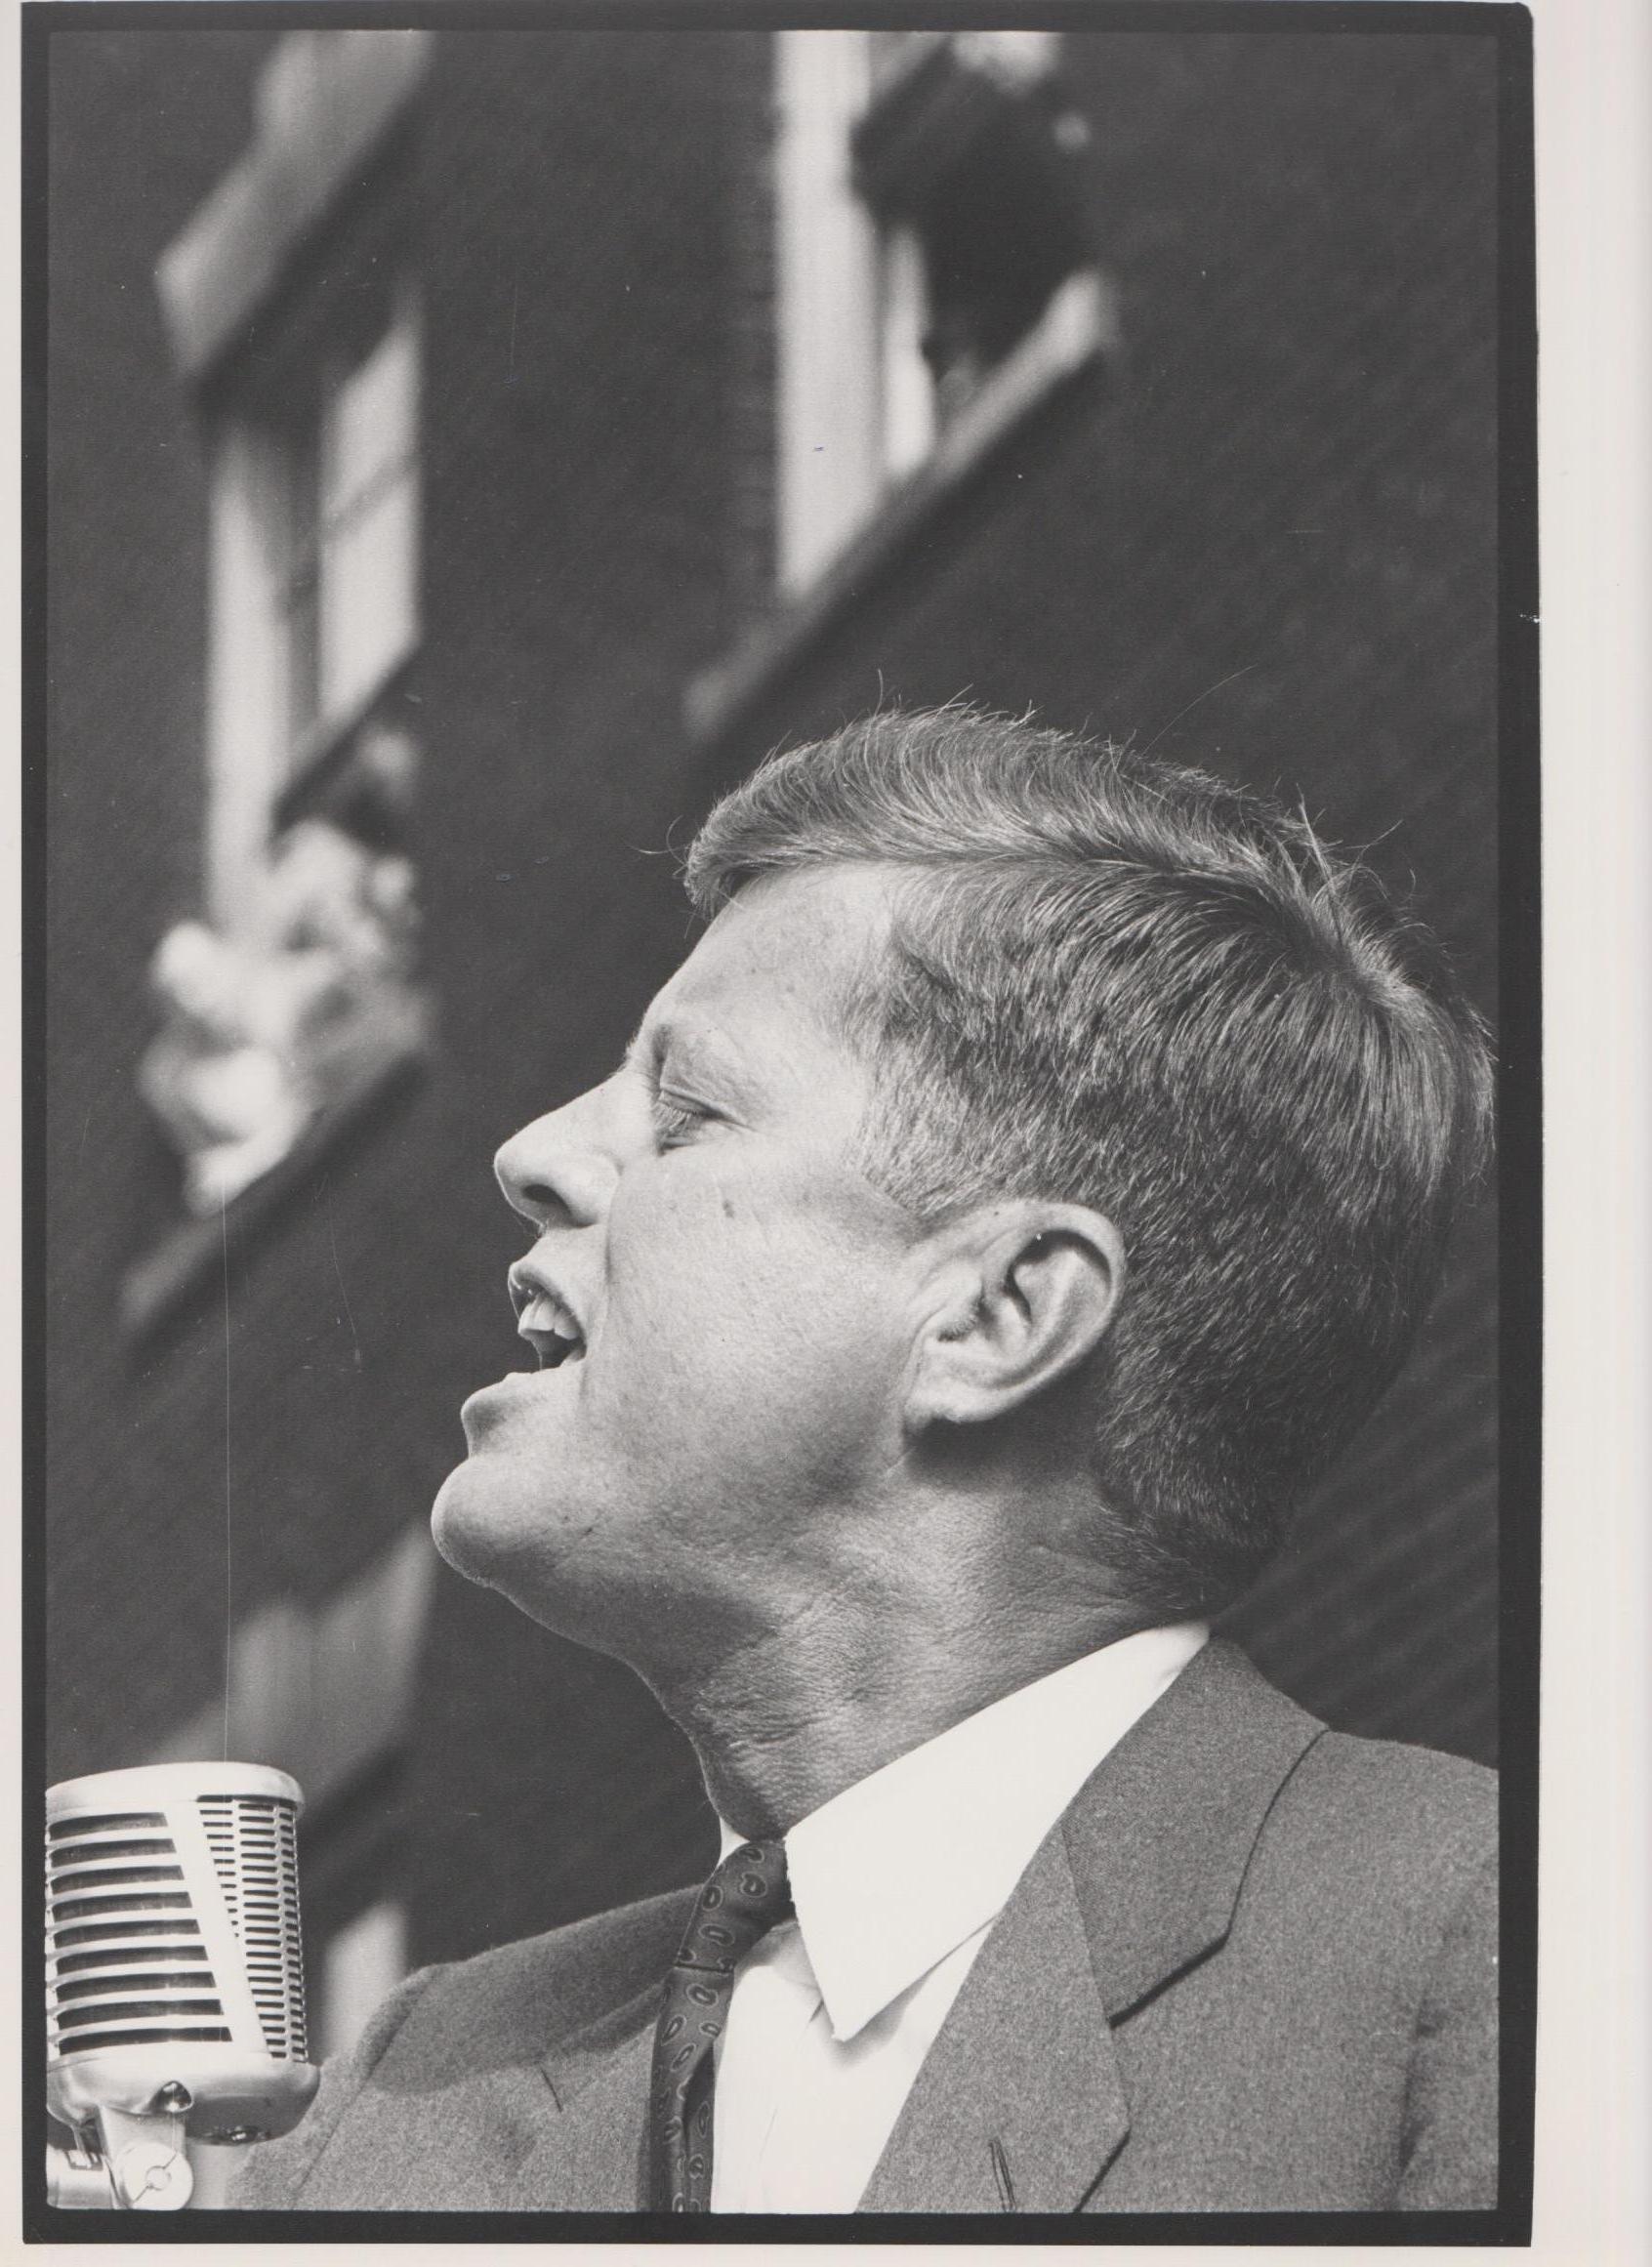 Rolf Gillhausen Portrait Photograph - JFK speaking - John F. Kennedy Election campaign 1960